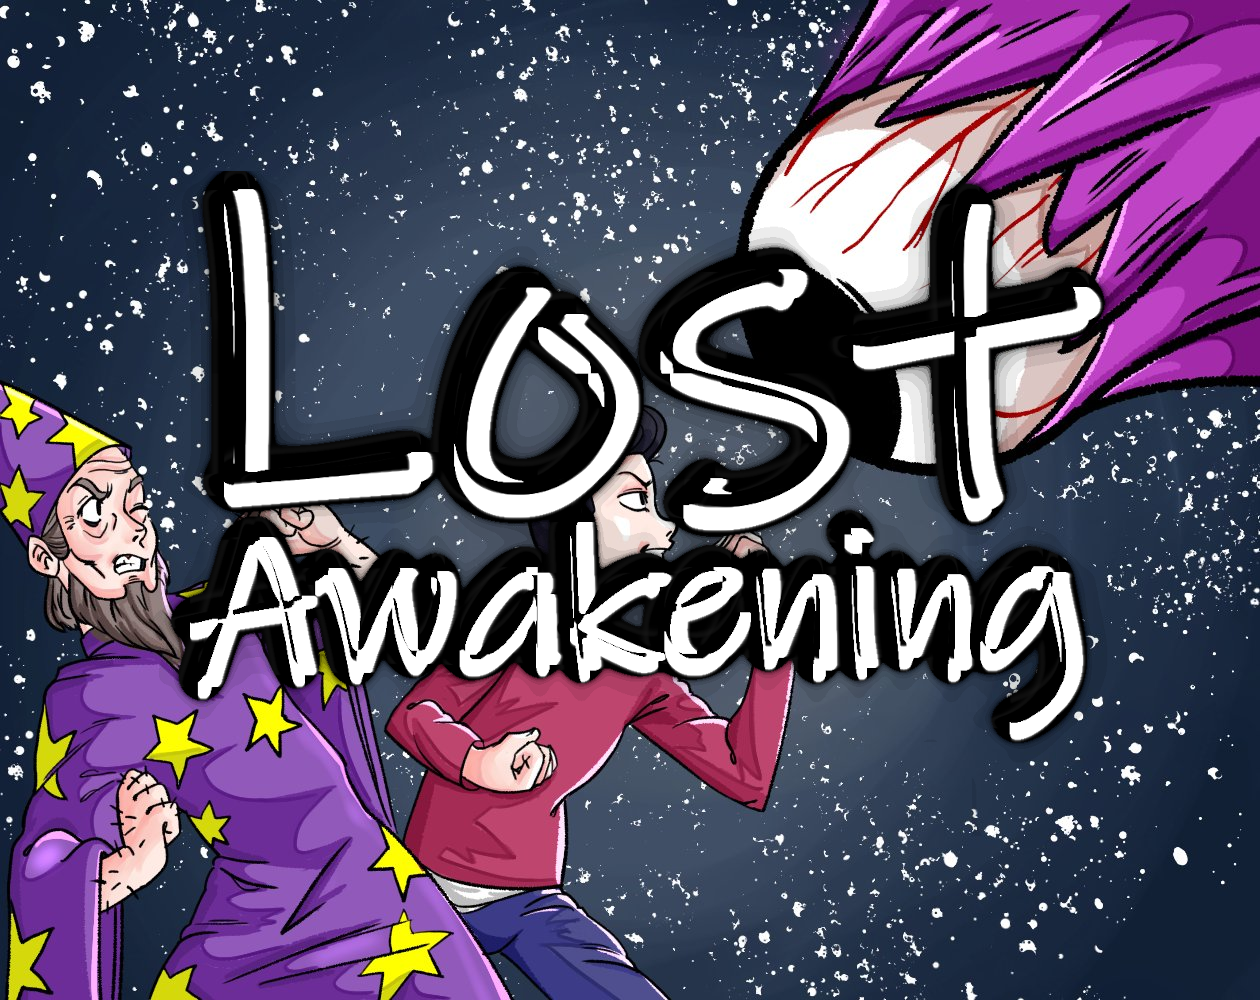 Lost Awakening, Chapter 1 Presskit Image